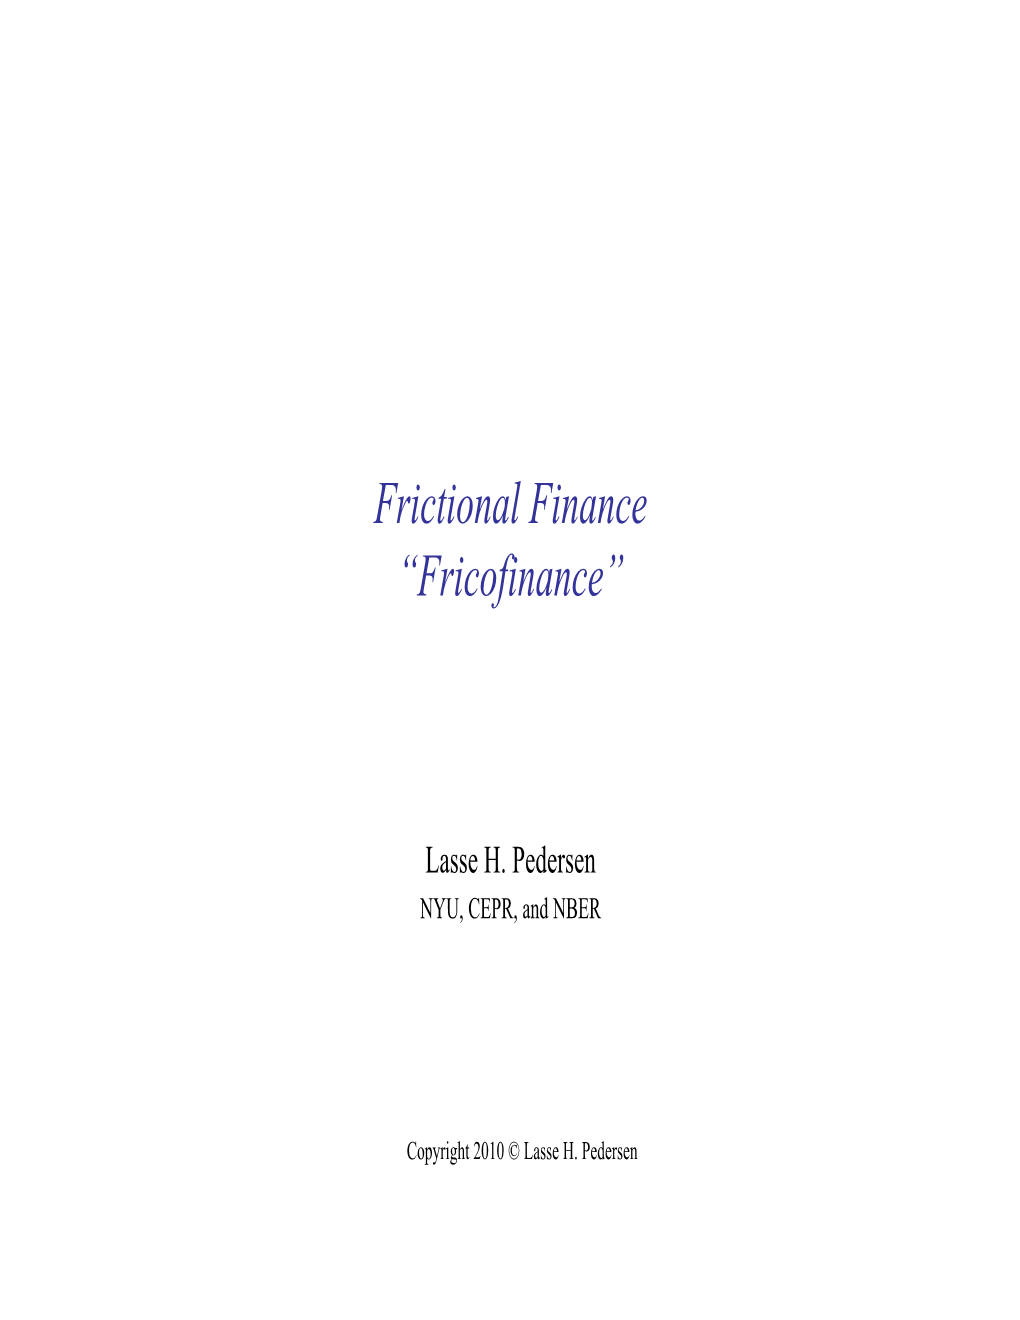 Frictional Finance “Fricofinance”